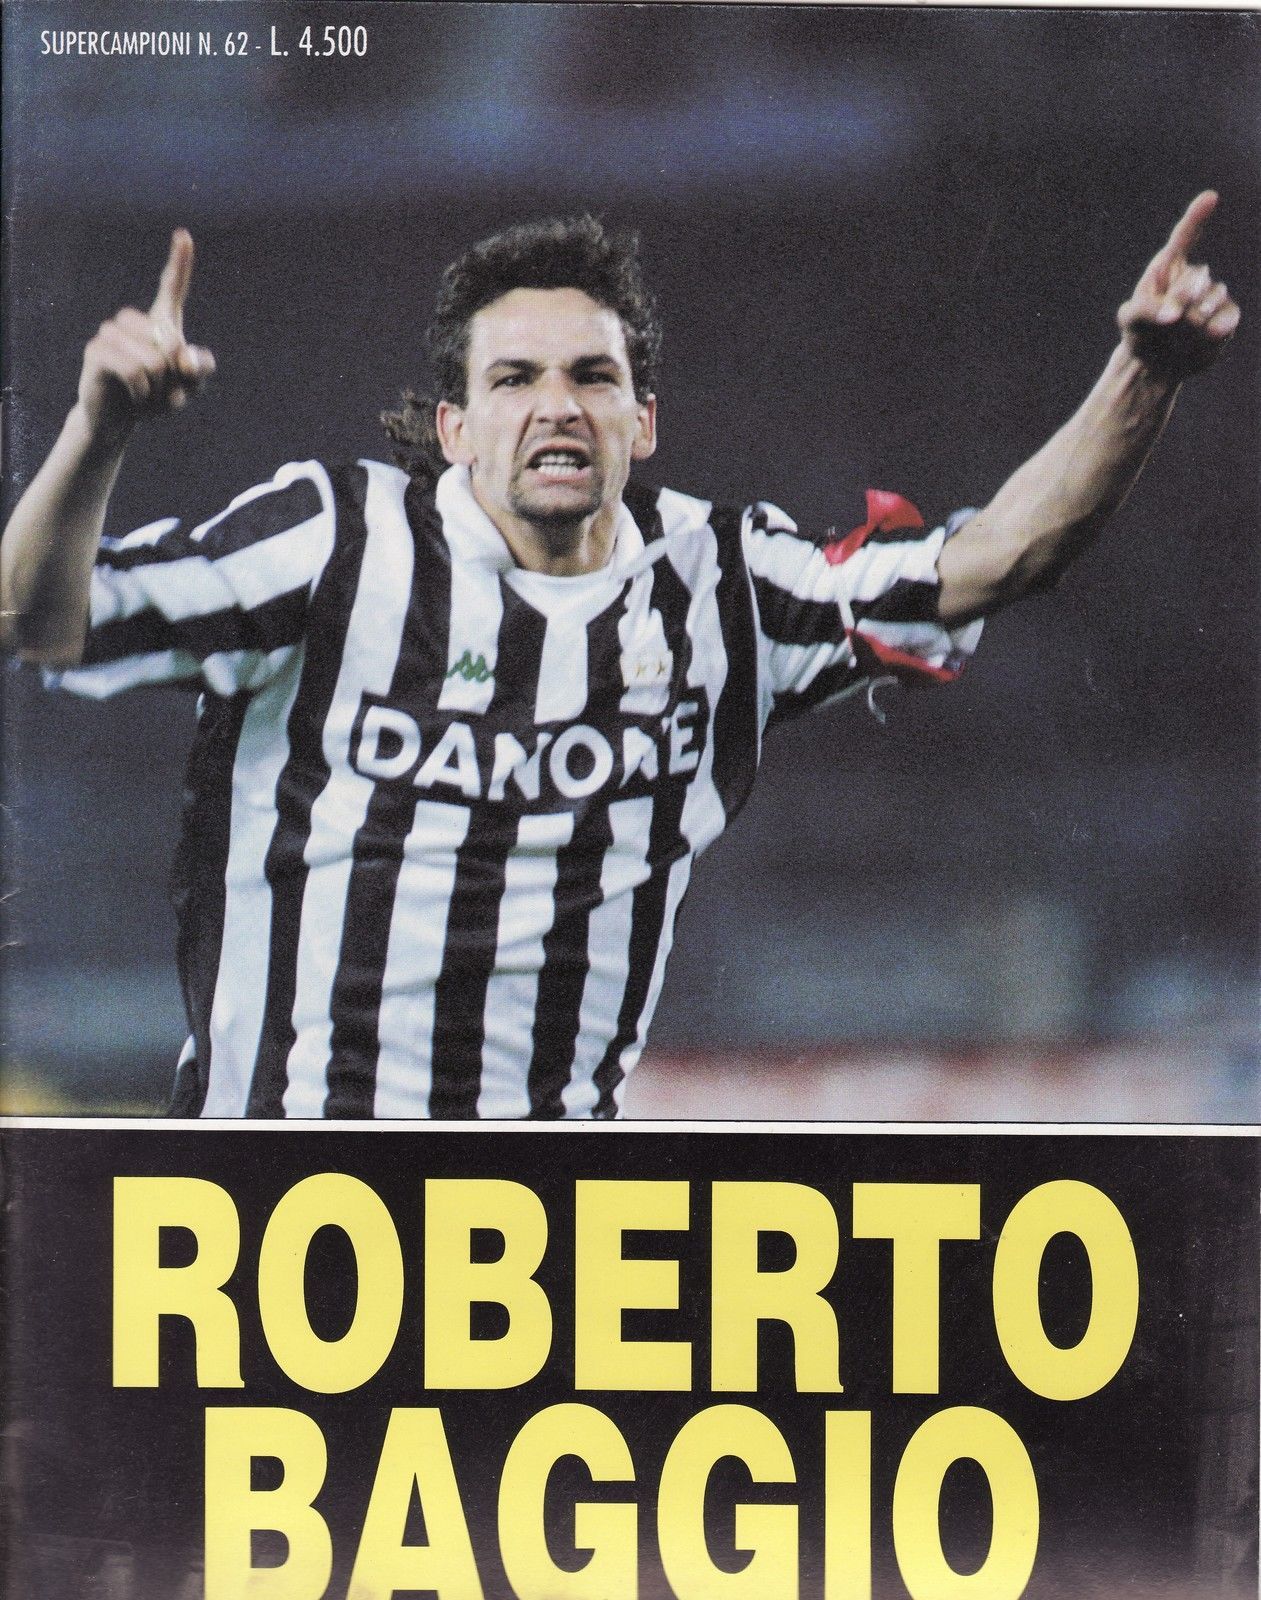 Roberto Baggio - Страница 6 Tumblr_nhnqk1XpJ41r90nv2o1_1280